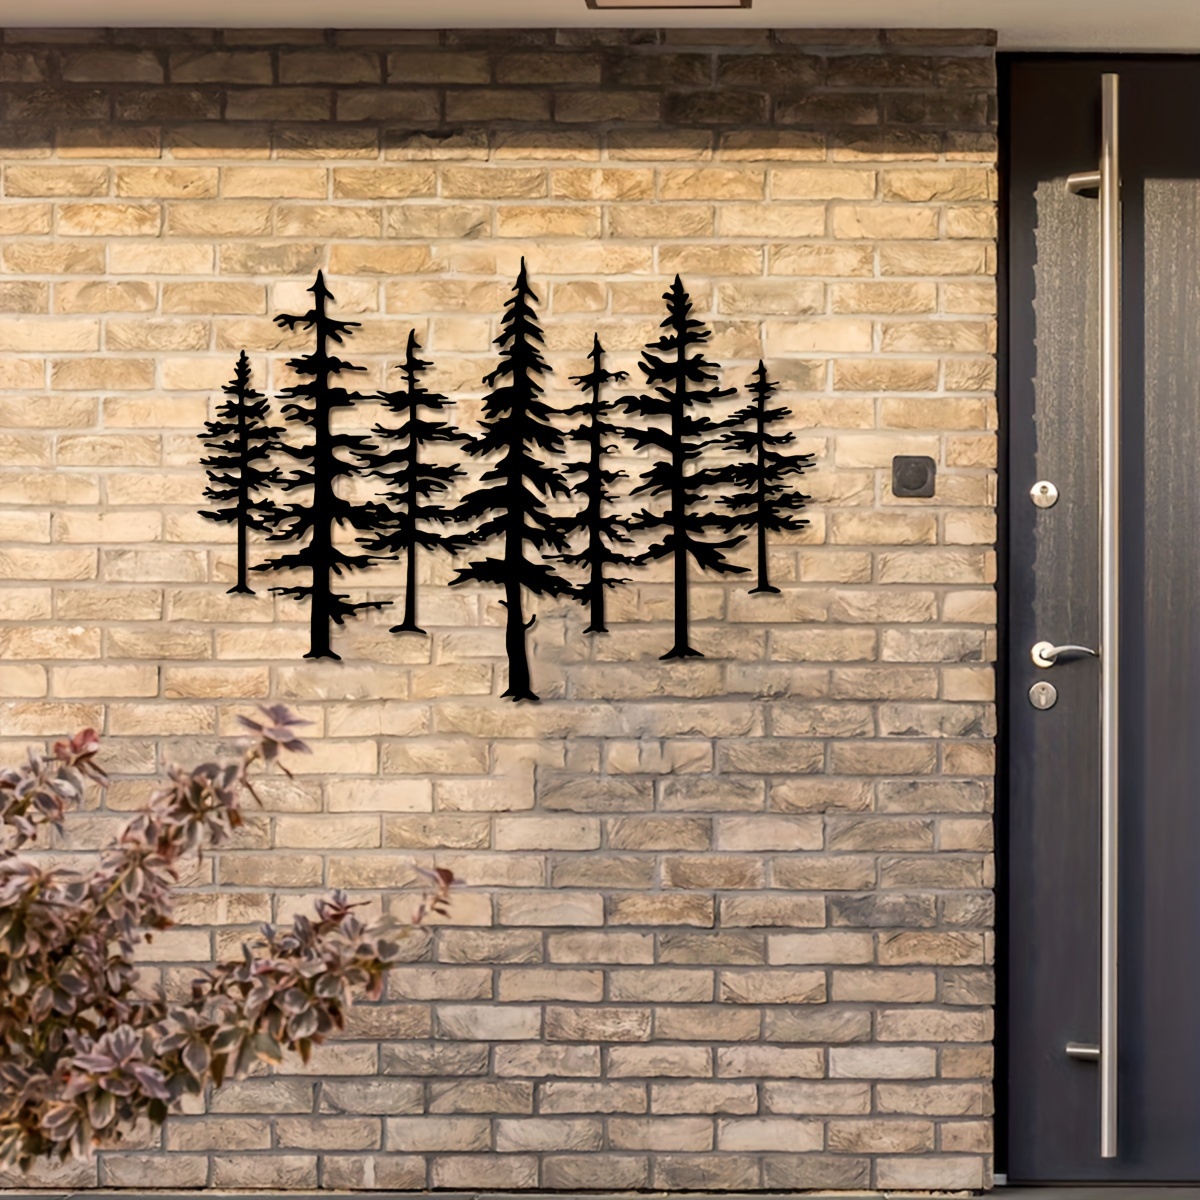 

Art Deco Metal Pine Tree Wall Sculpture - Thanksgiving Home Decor, Nature-inspired Forest Landscape Wall Hanging, Home Office Wall Mount Metal Art, Outdoor Garden Sign, Housewarming Gift - 1pc